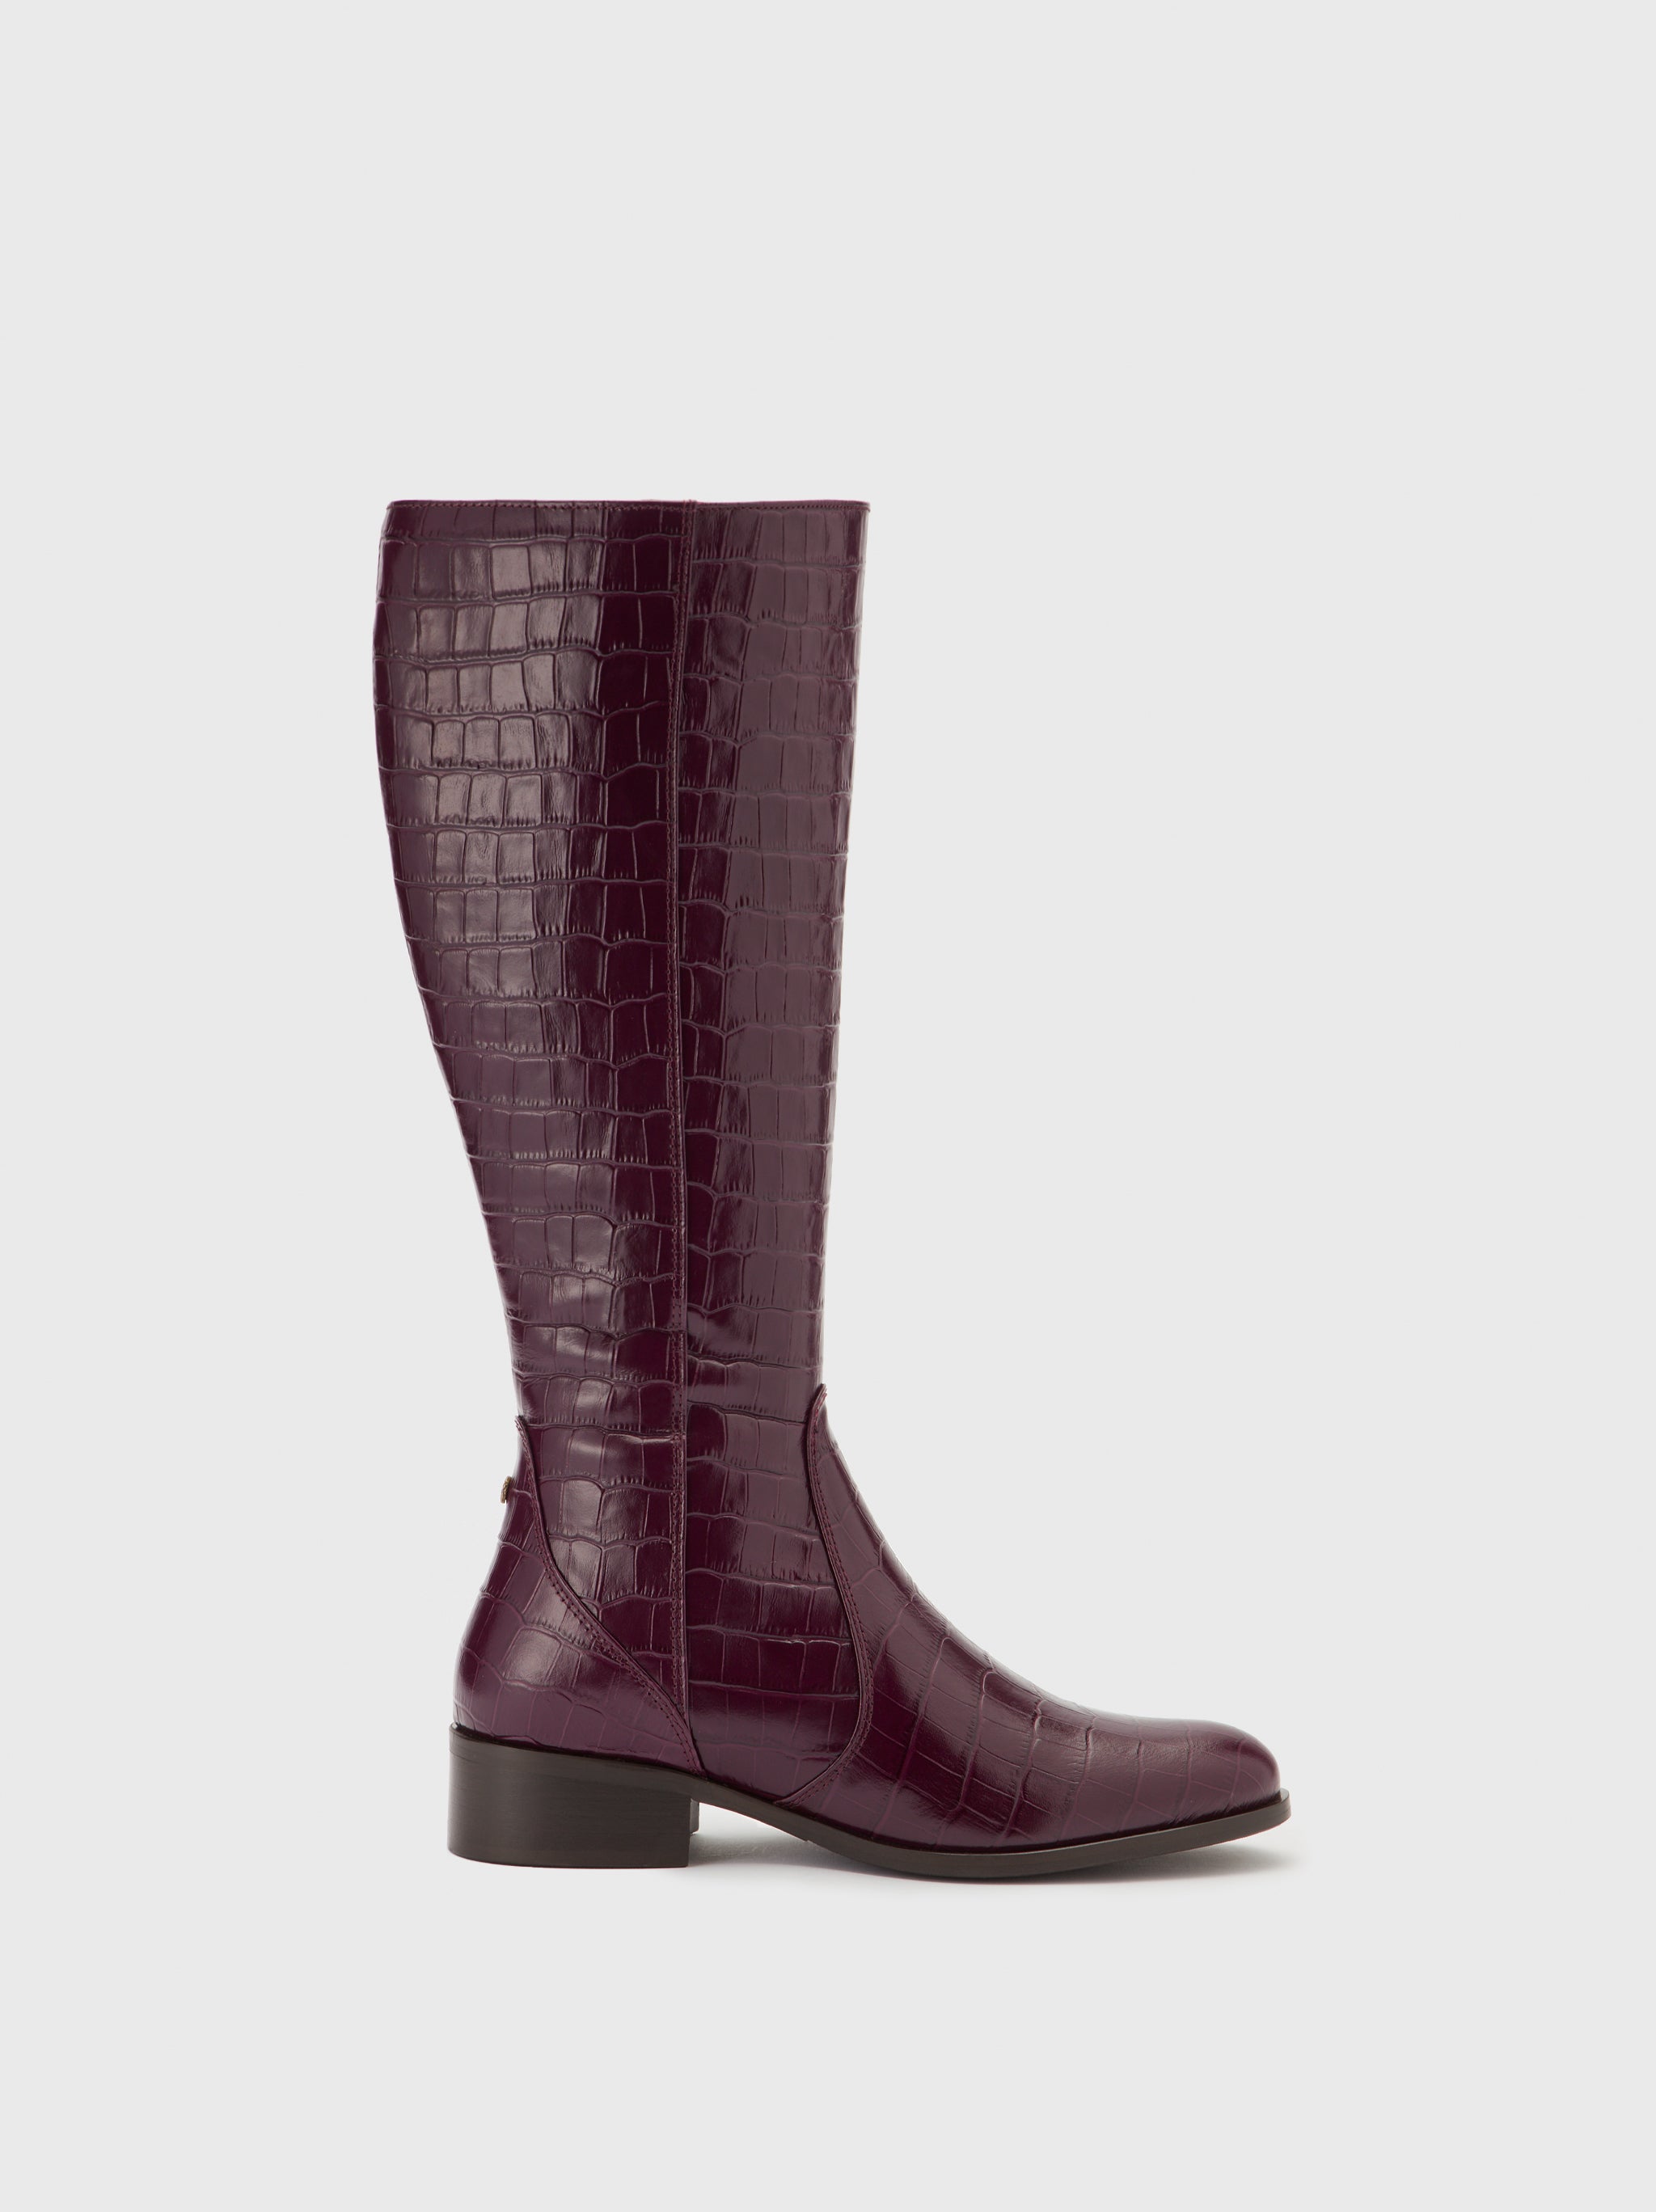 Knee high burgundy croc boots